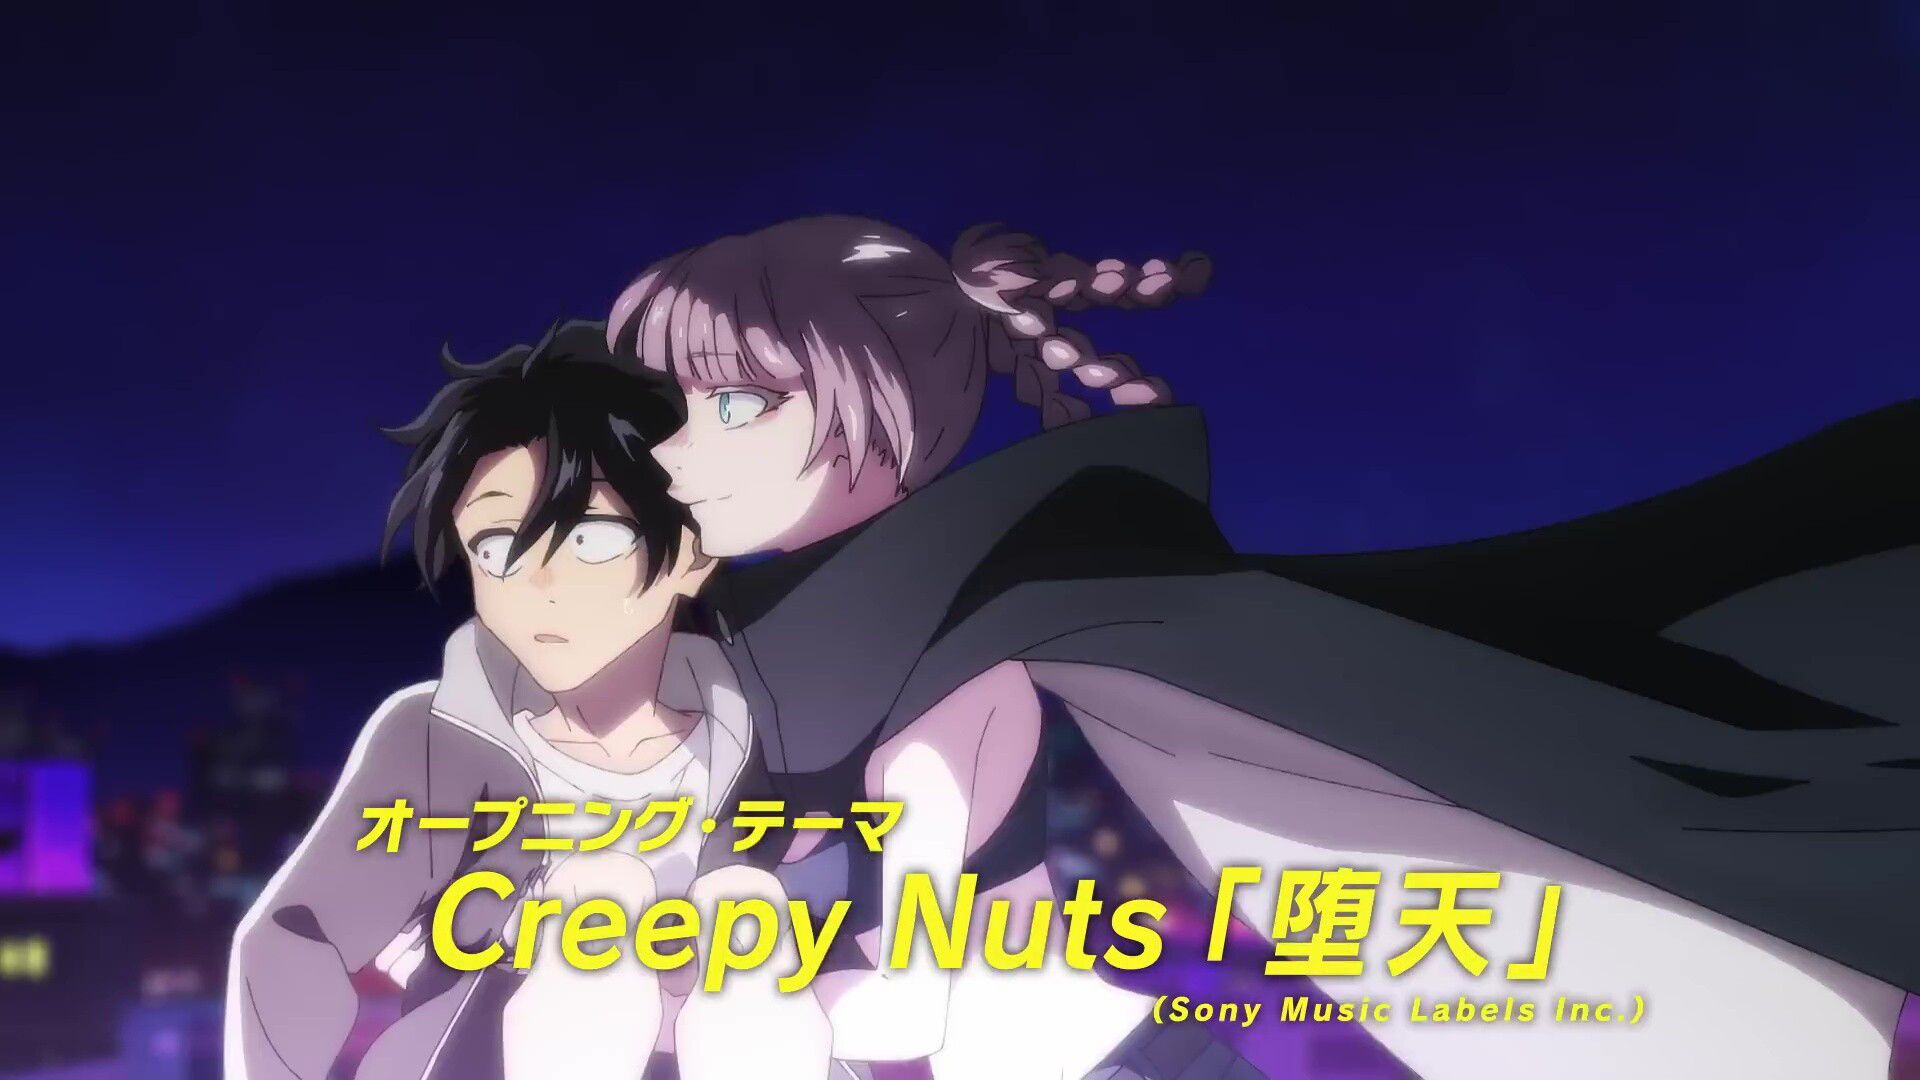 Anime "Yofukashi no Uta" A scene where you yapple with an erotic girl on a futon! Broadcasting starts in July 19